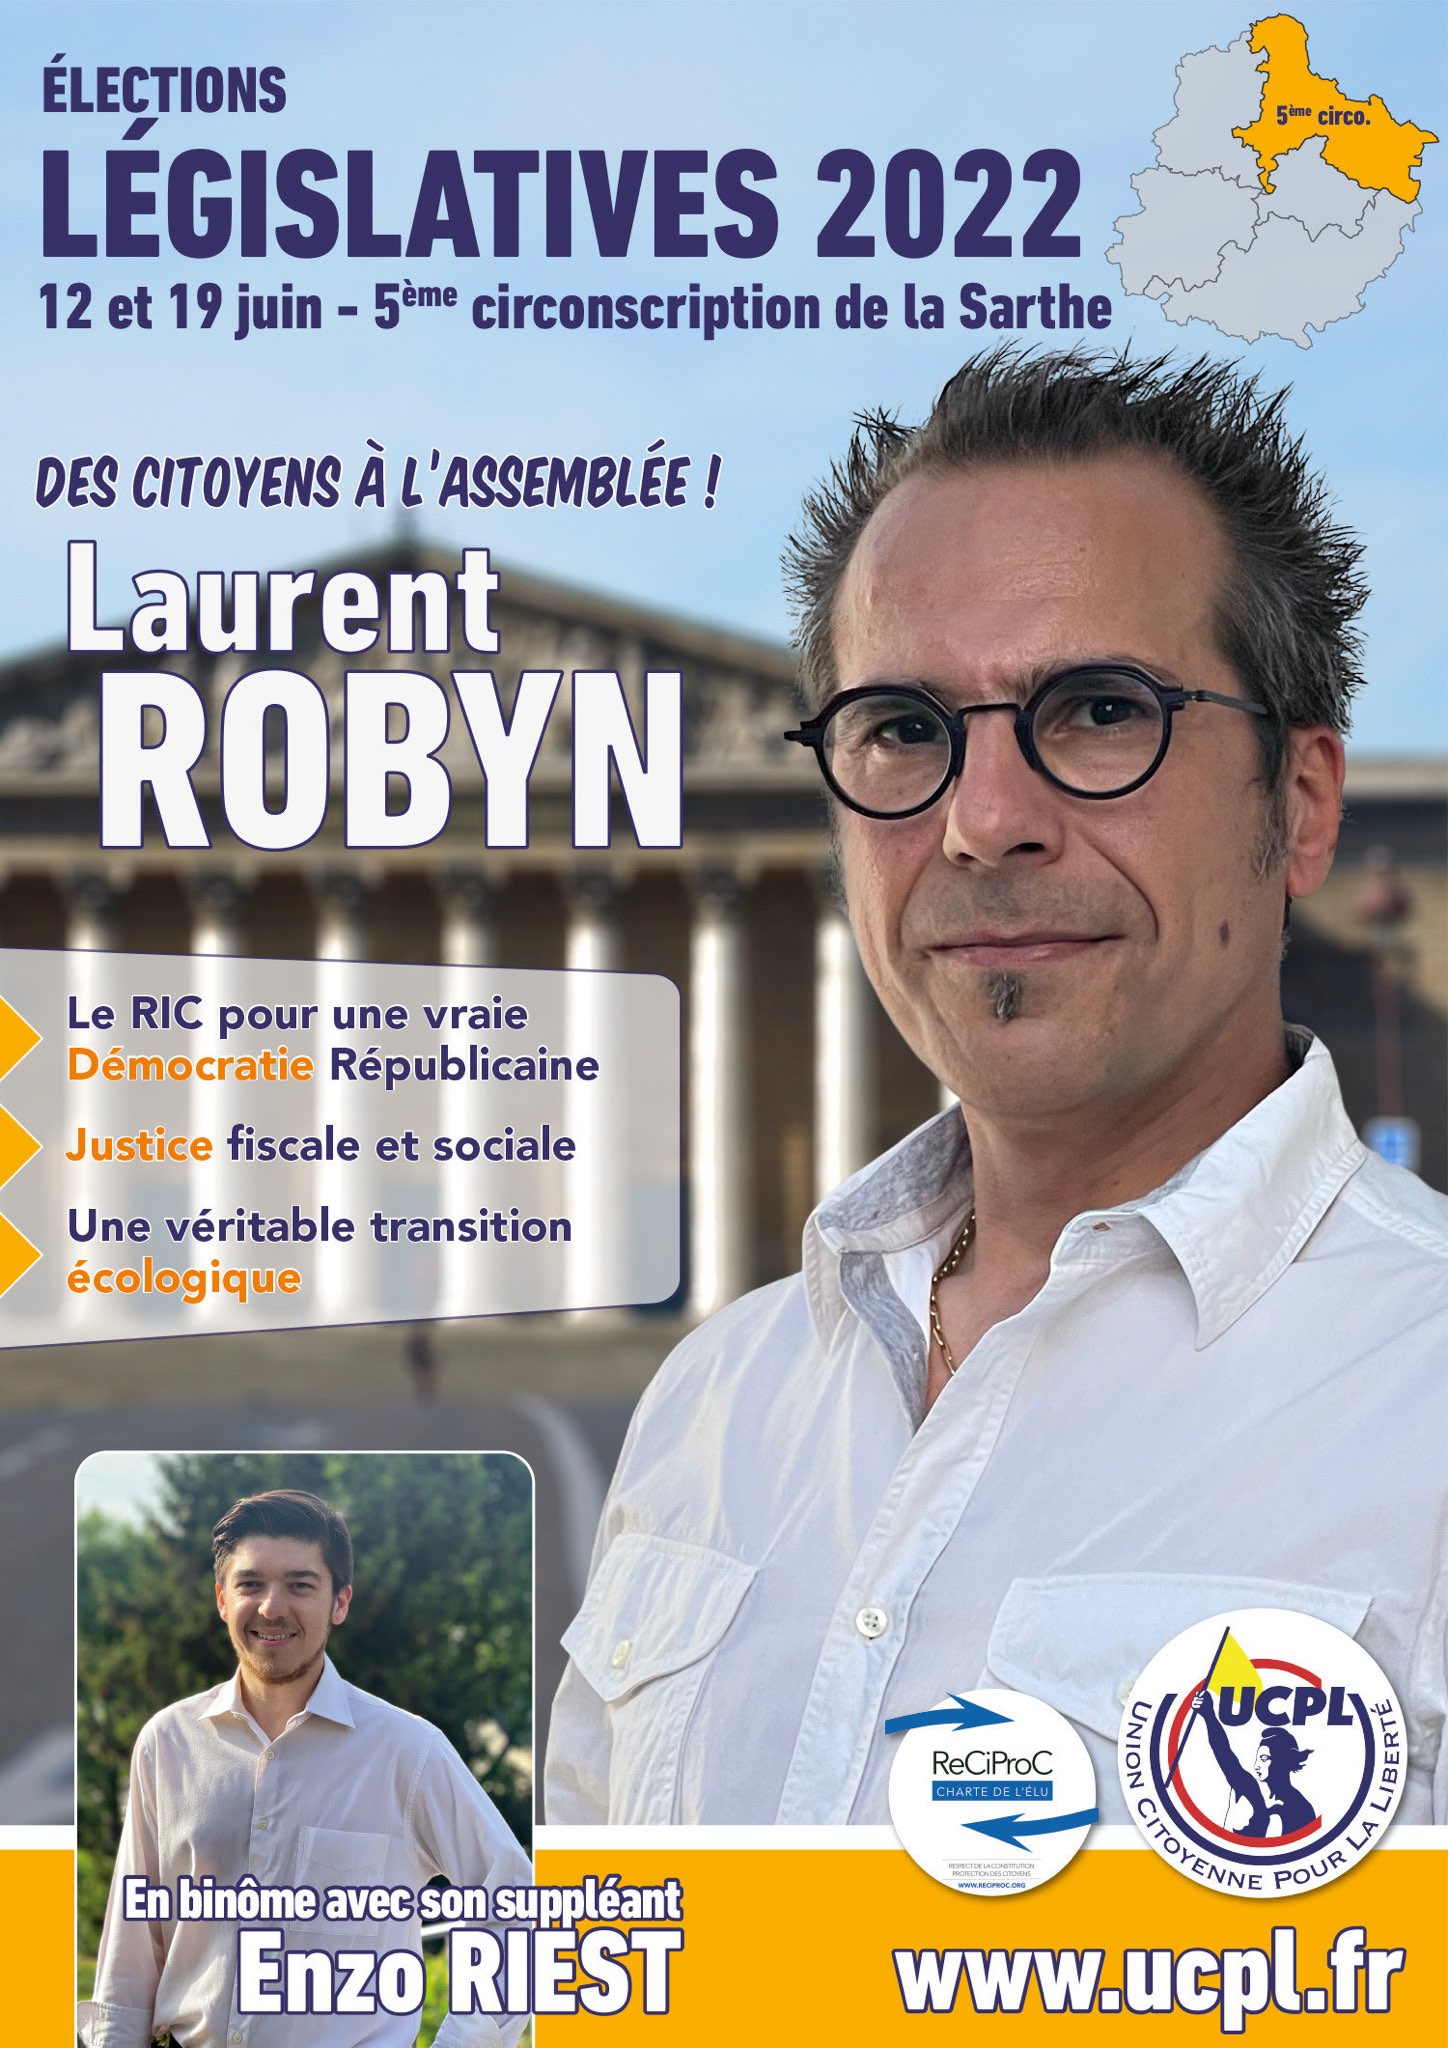 Laurent-ROBYN-5-eme-circonscription-de-la-sarthe